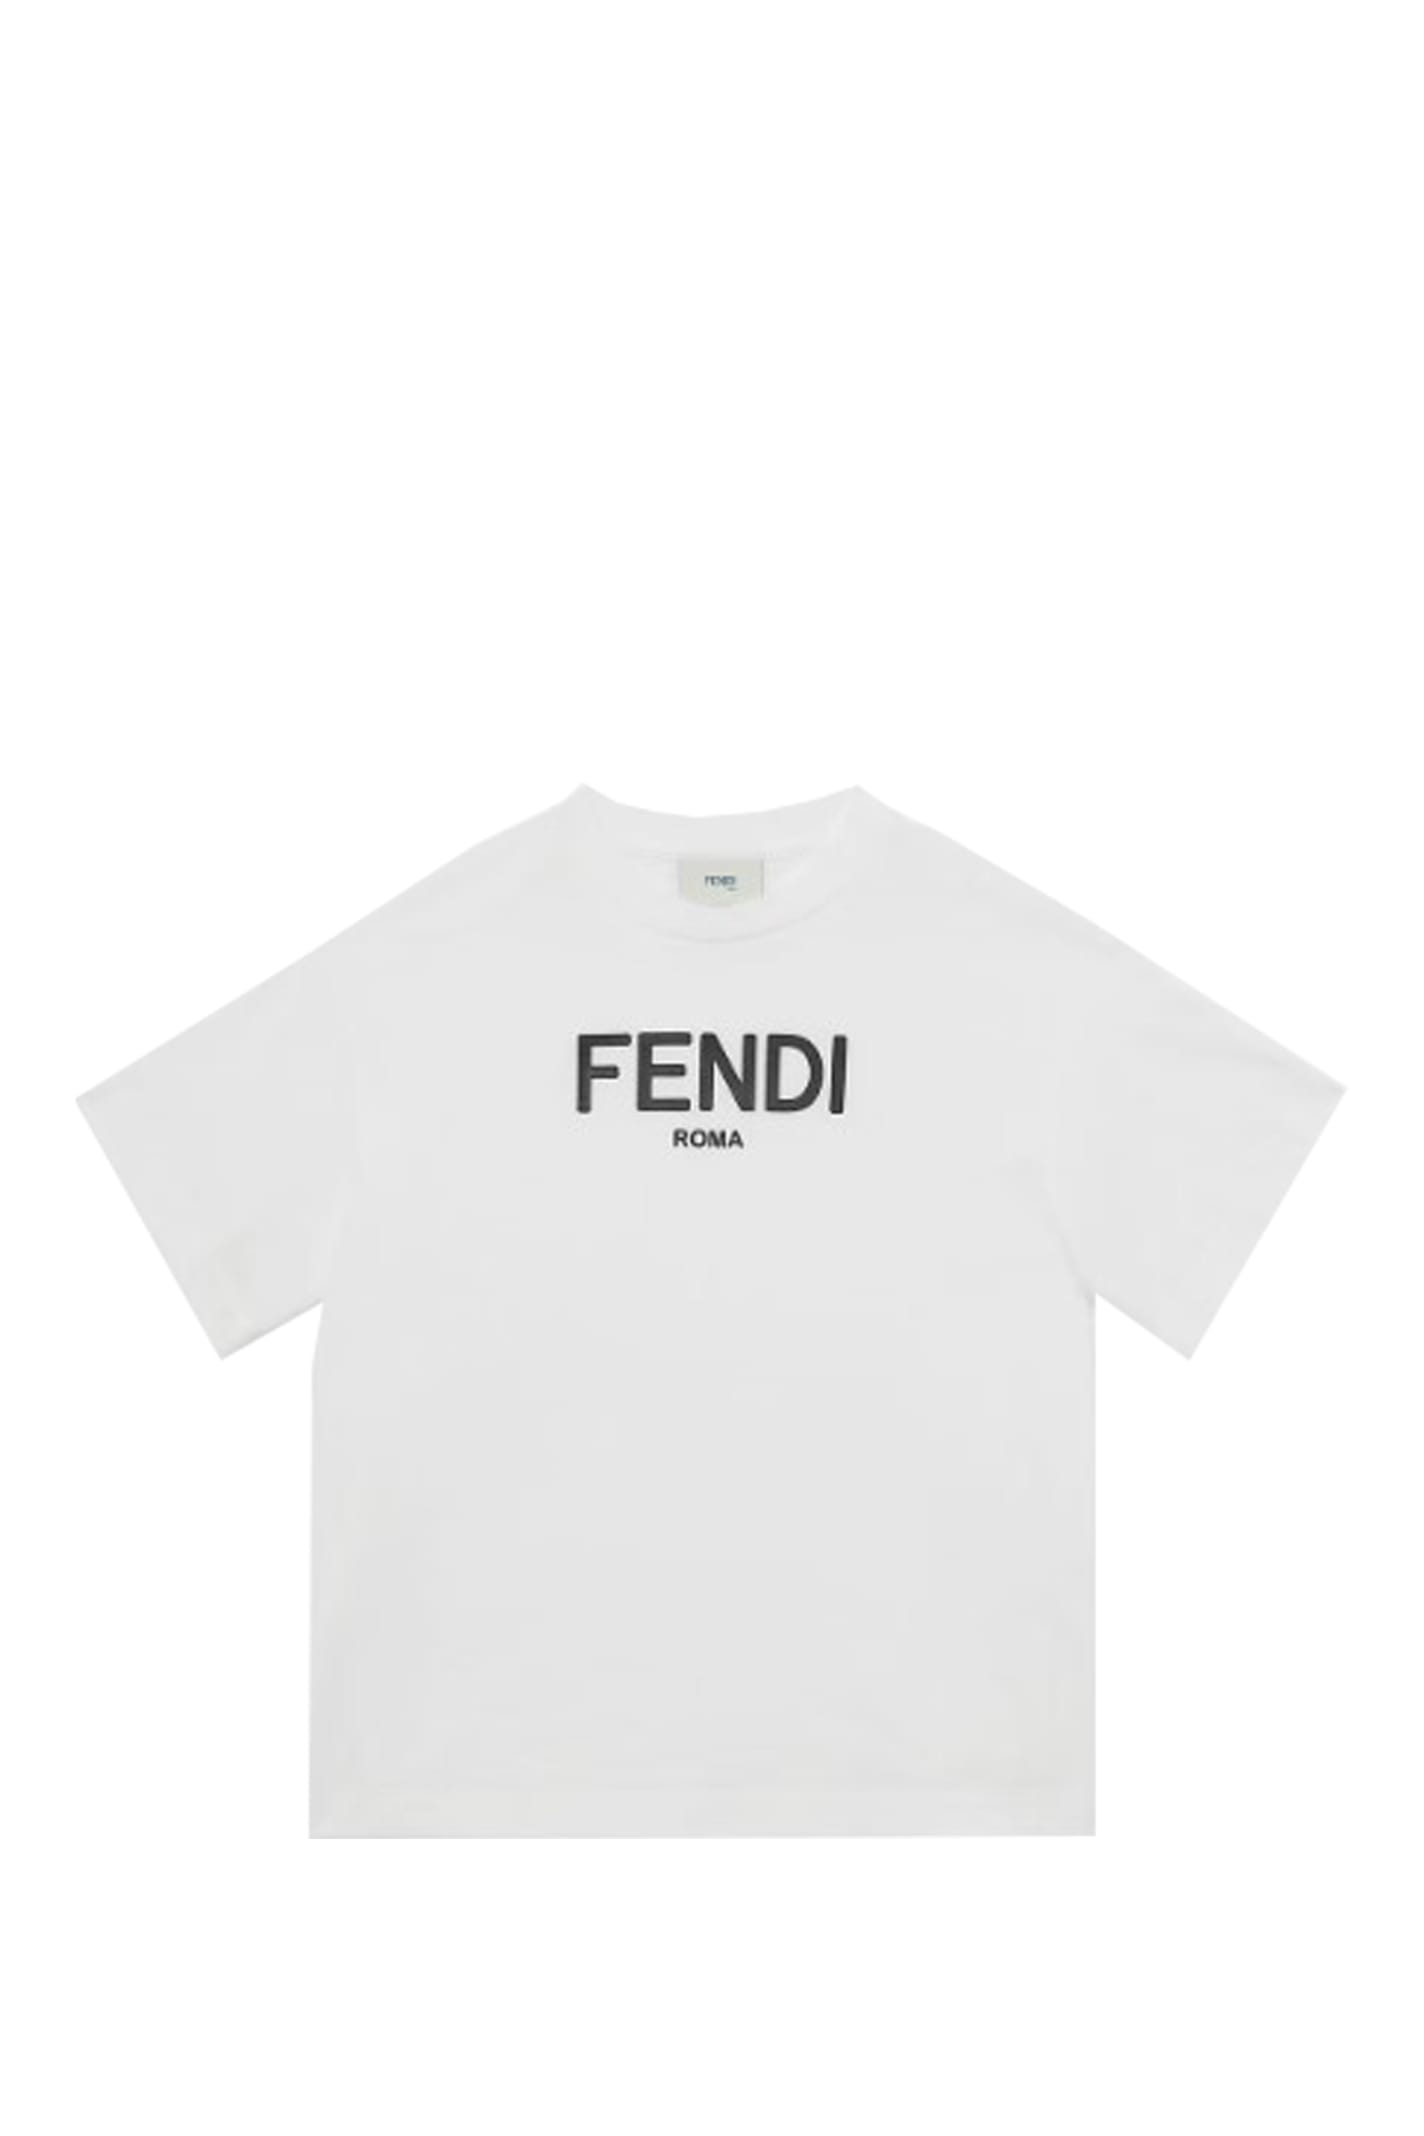 Fendi Kids' Junior T-shirt In Bainco